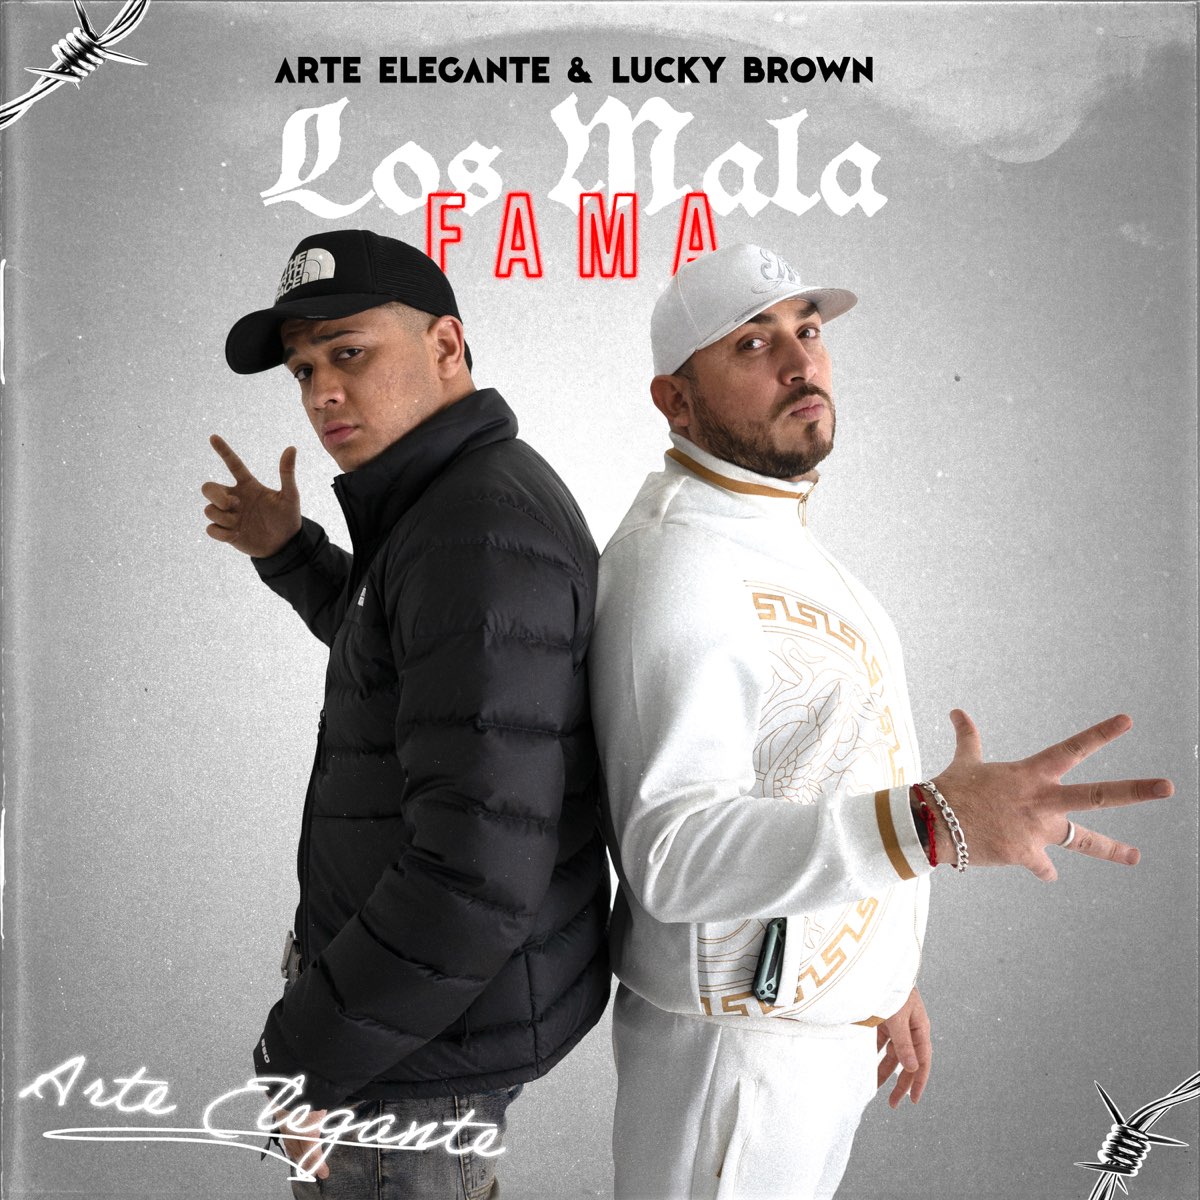 Los Mala Fama - Single - Album by Arte Elegante & Lucky Brown - Apple Music